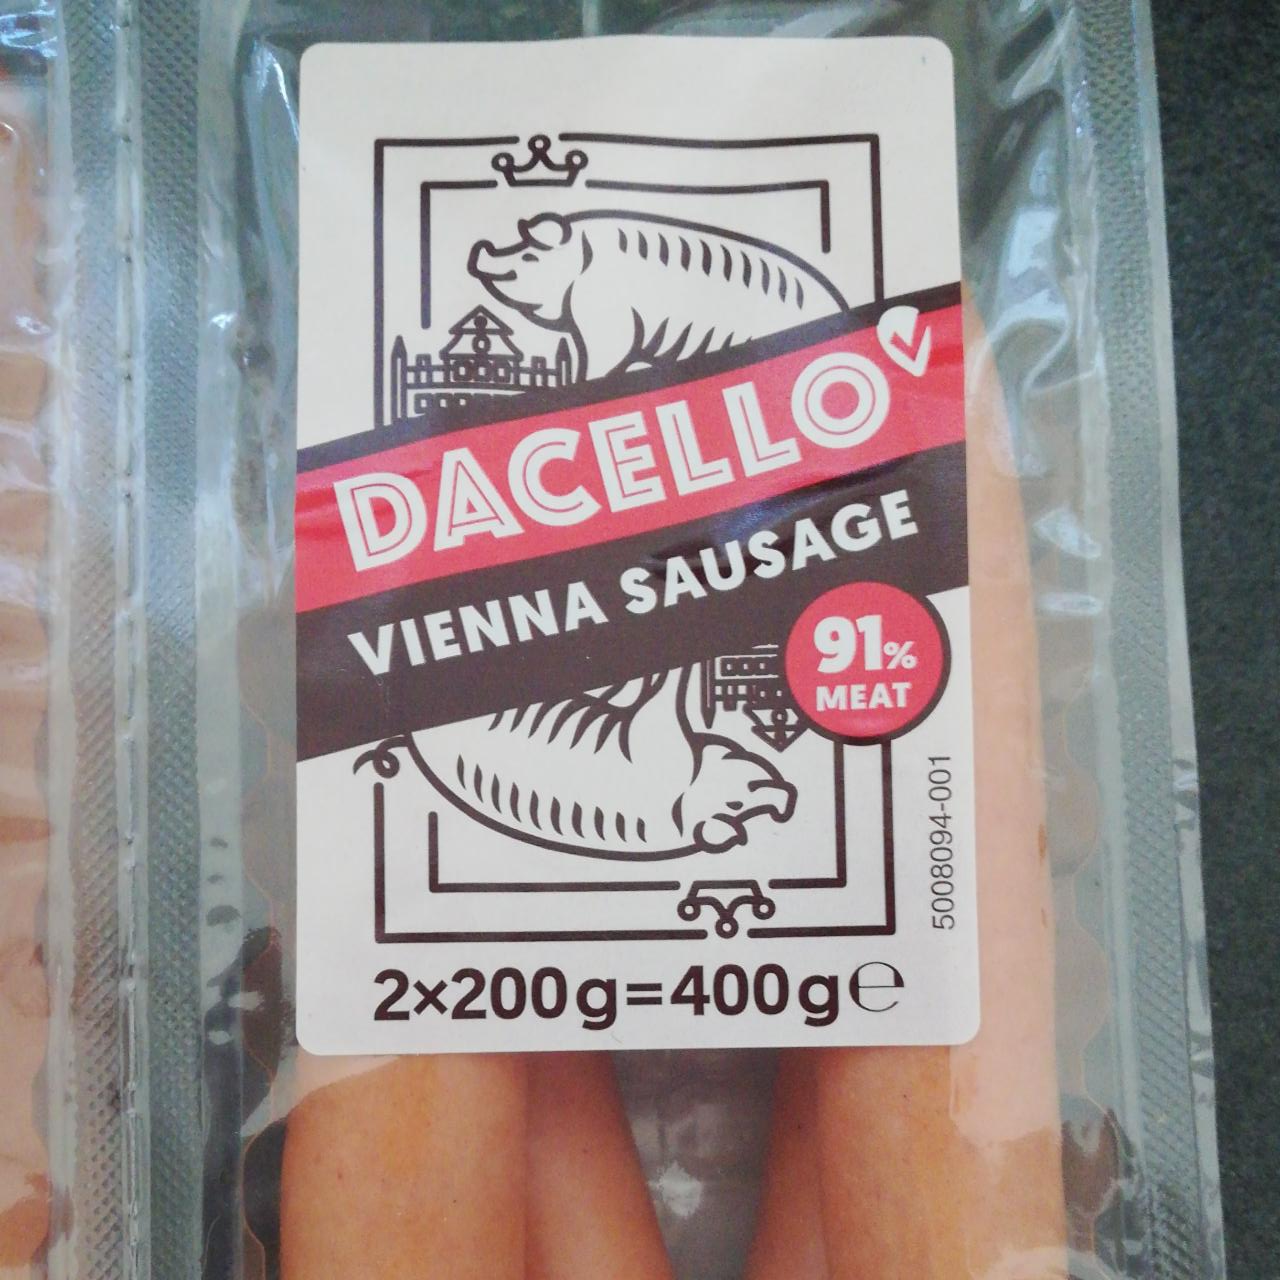 Képek - Vienna Sausage 91% meat Dacello